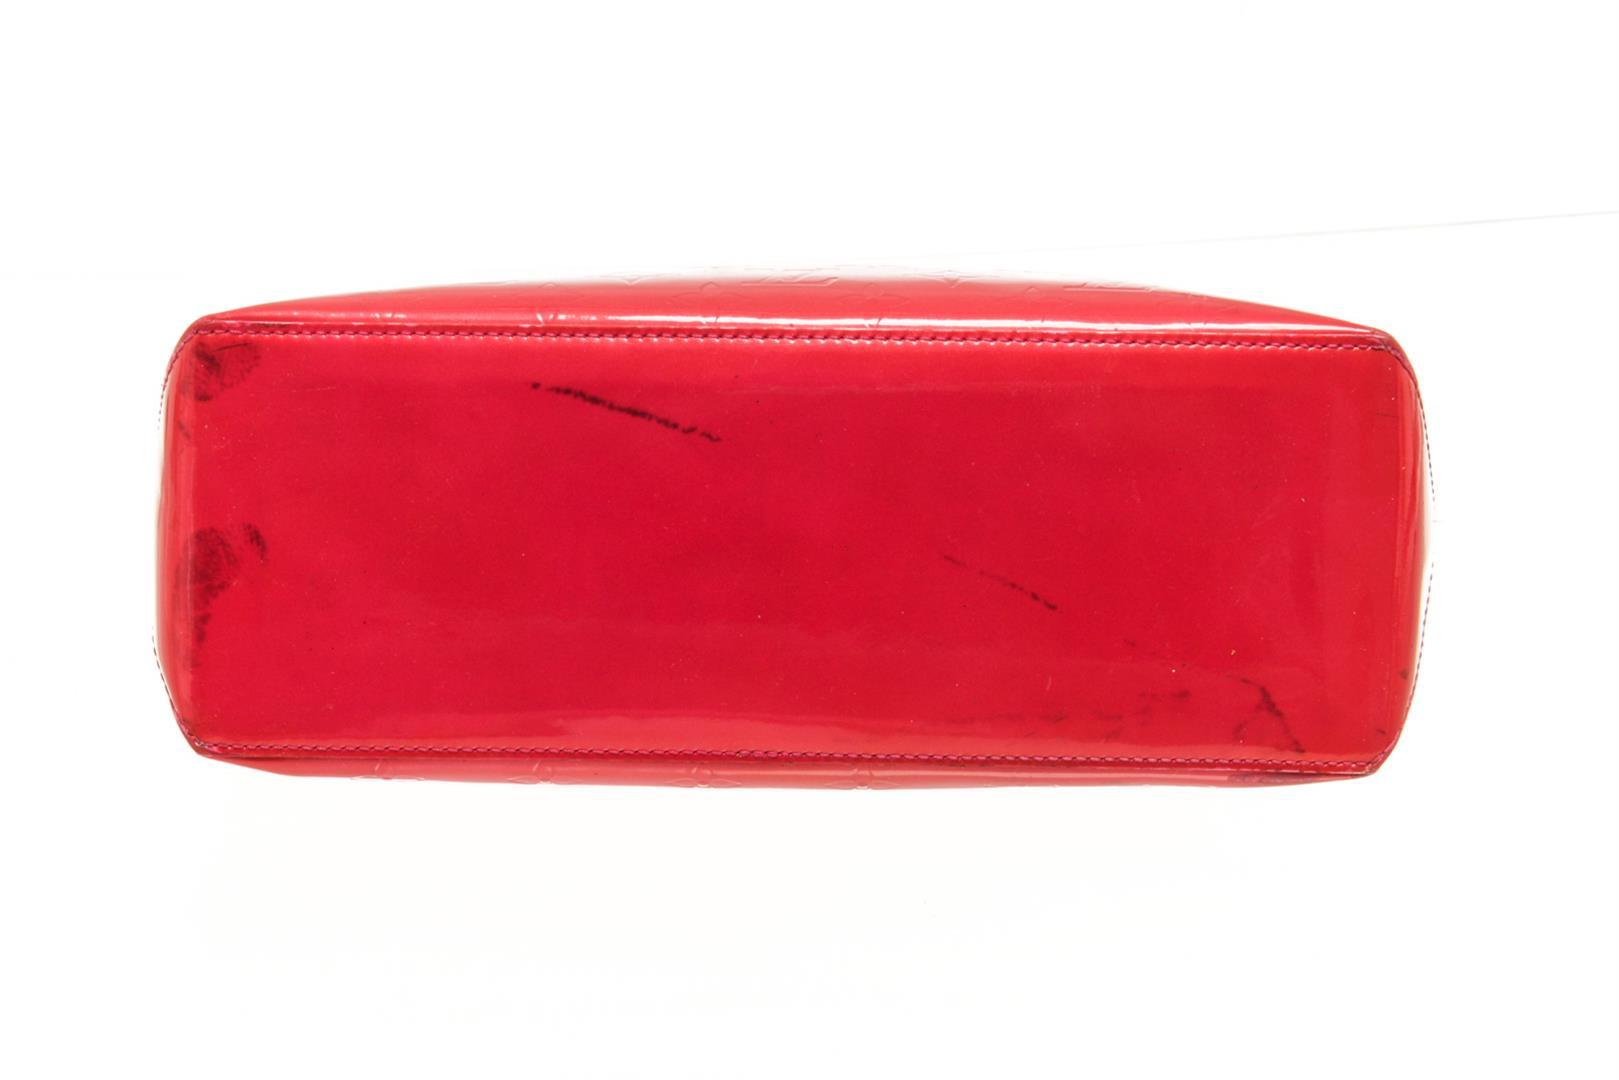 Louis Vuitton Rouge Grenadine Monogram Vernis Leather Wilshire Pm Handbag